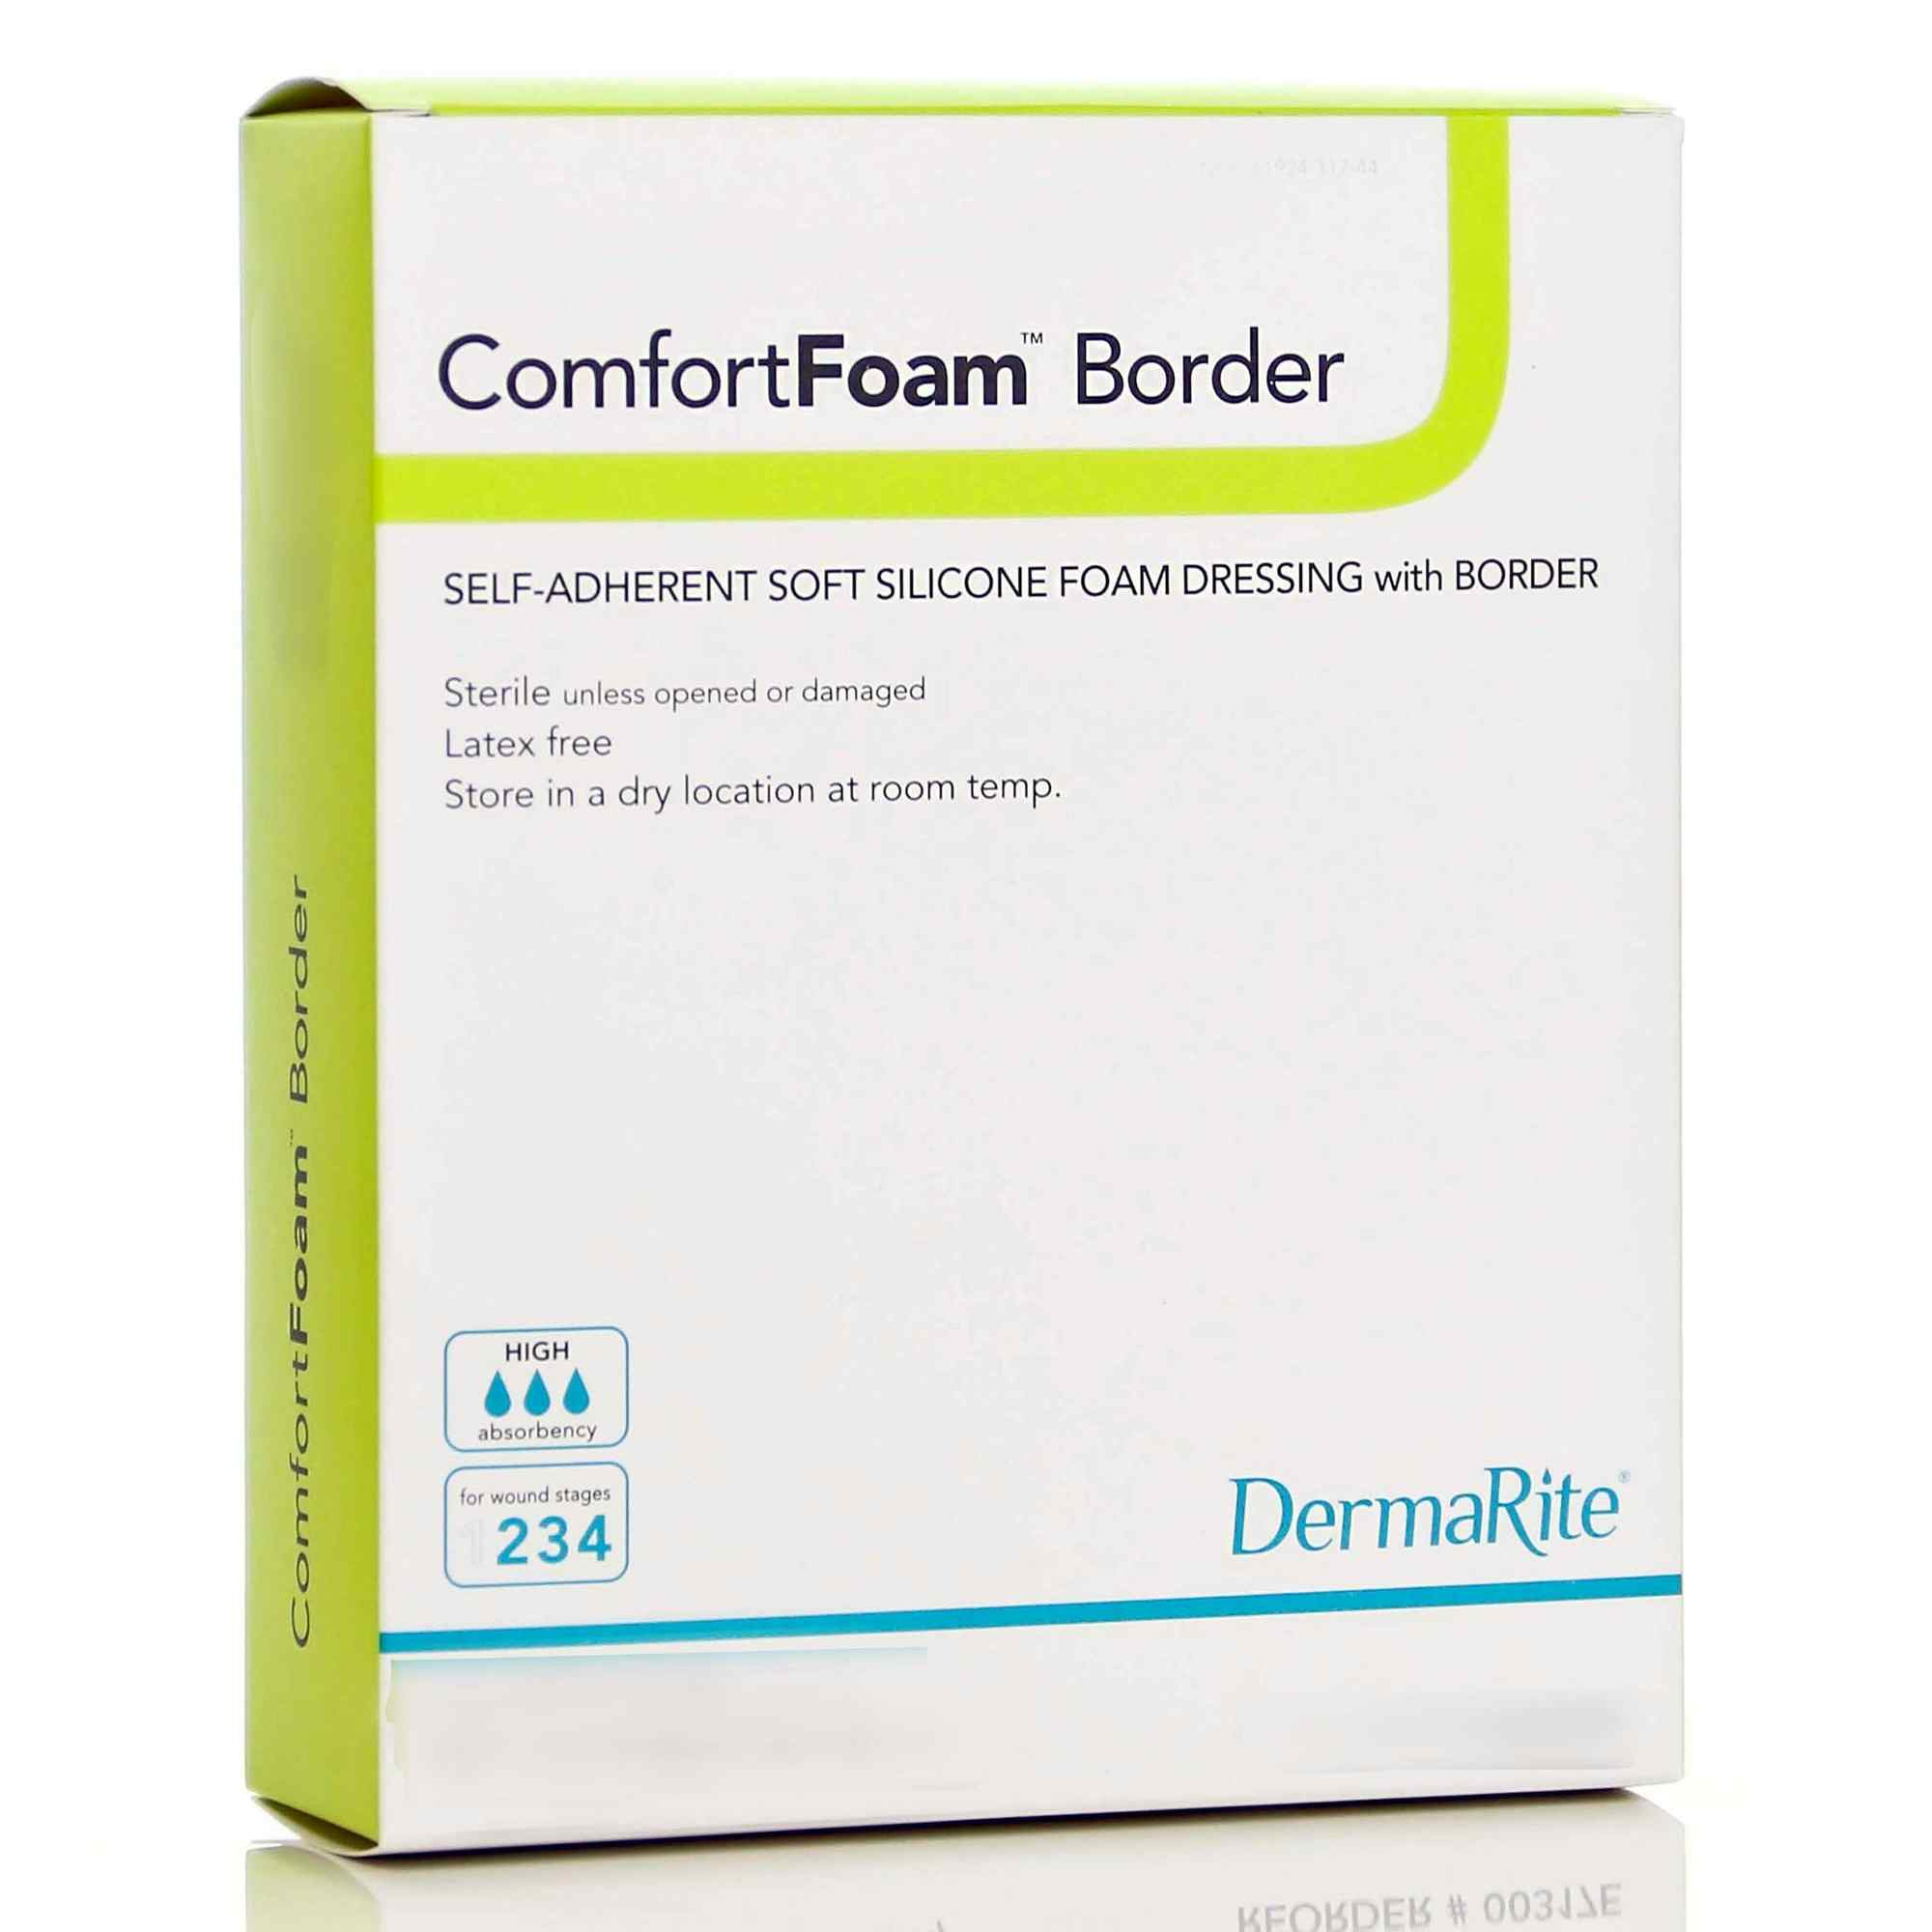 DermaRite ComfortFoam Border Self-Adherent Soft Silicone Foam Dressing with Border, Sterile, 7-1/5 X 7-1/5", 43880, Box of 5